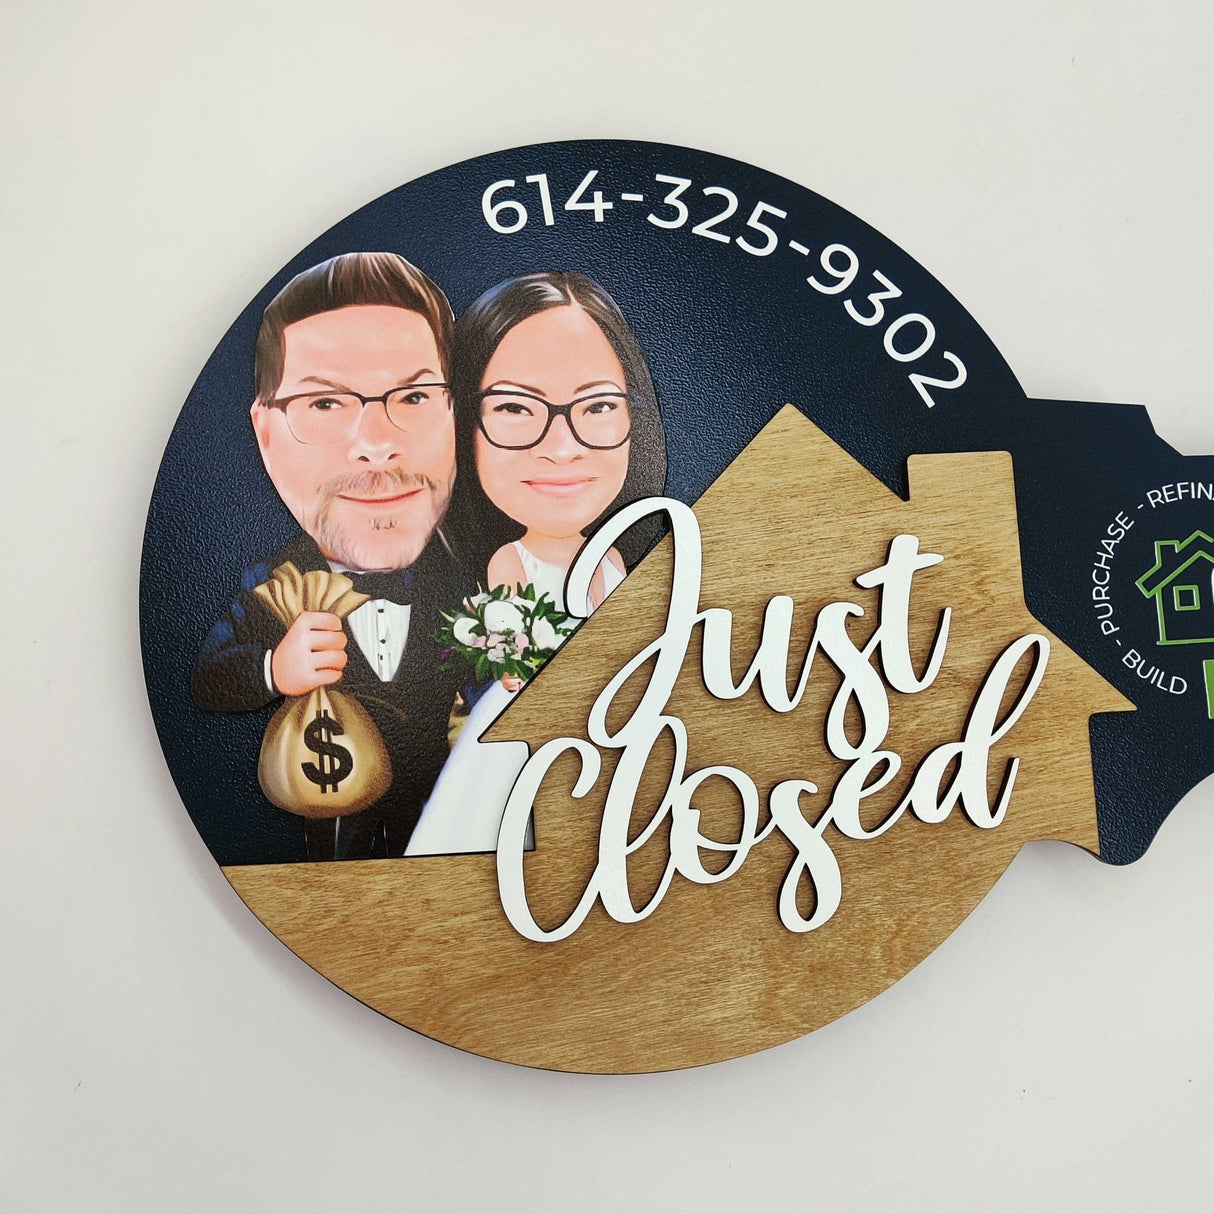 Custom Key Shaped Prop Realtor Sign «Just Closed» - Real Estate Store